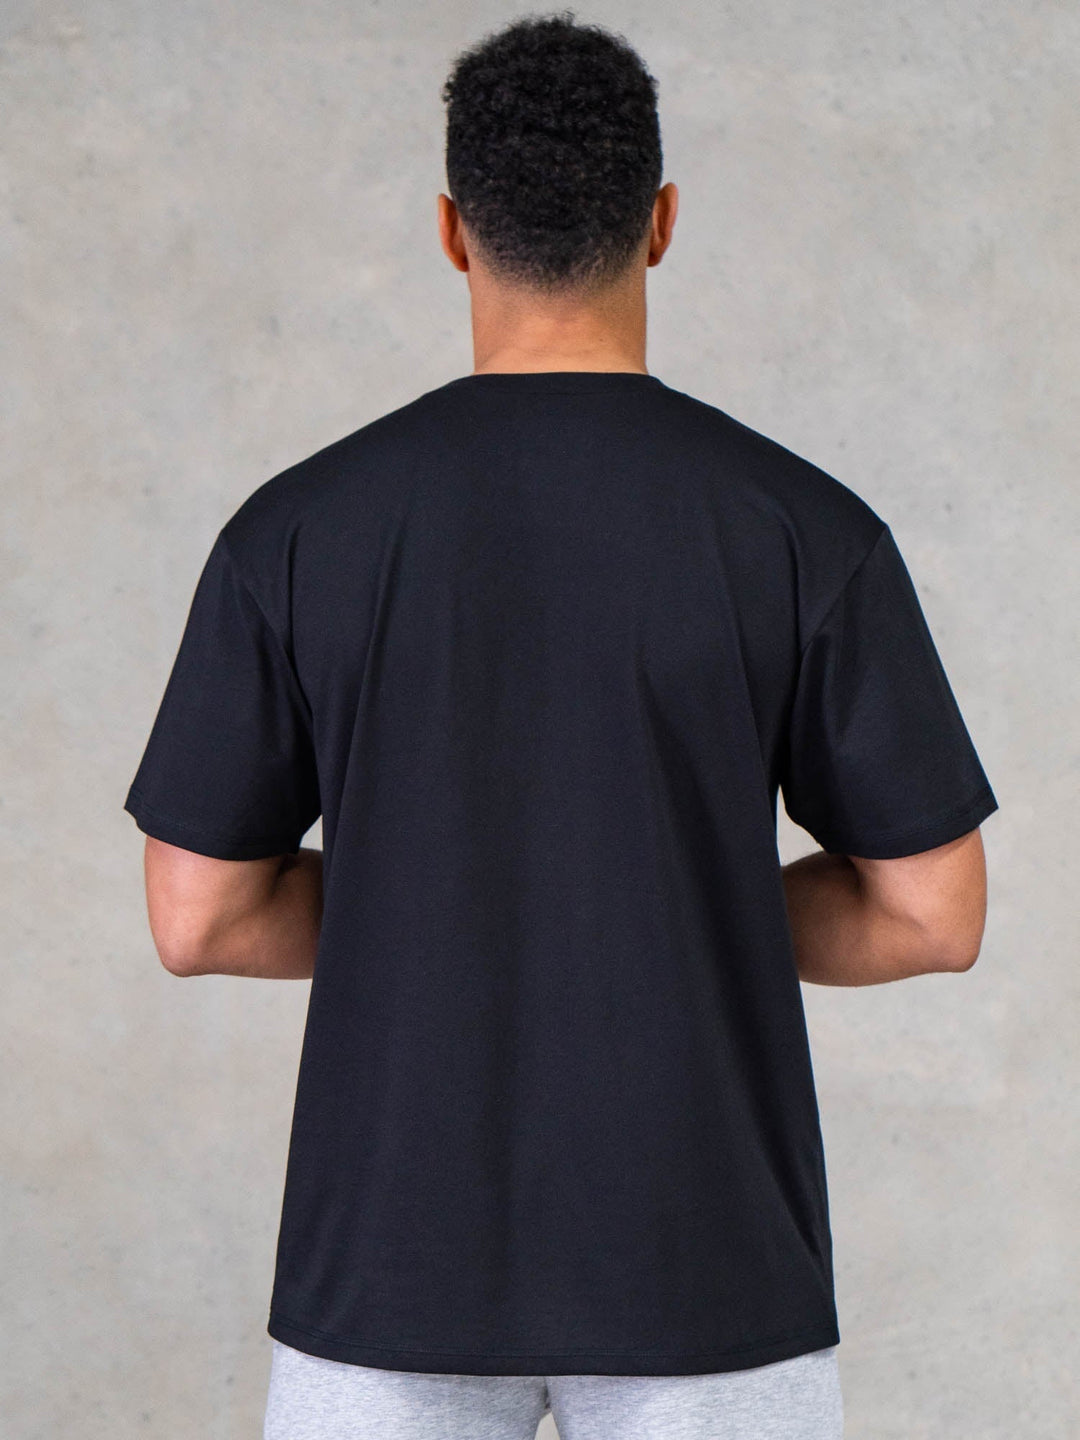 Legacy T-Shirt - Black Clothing Ryderwear 